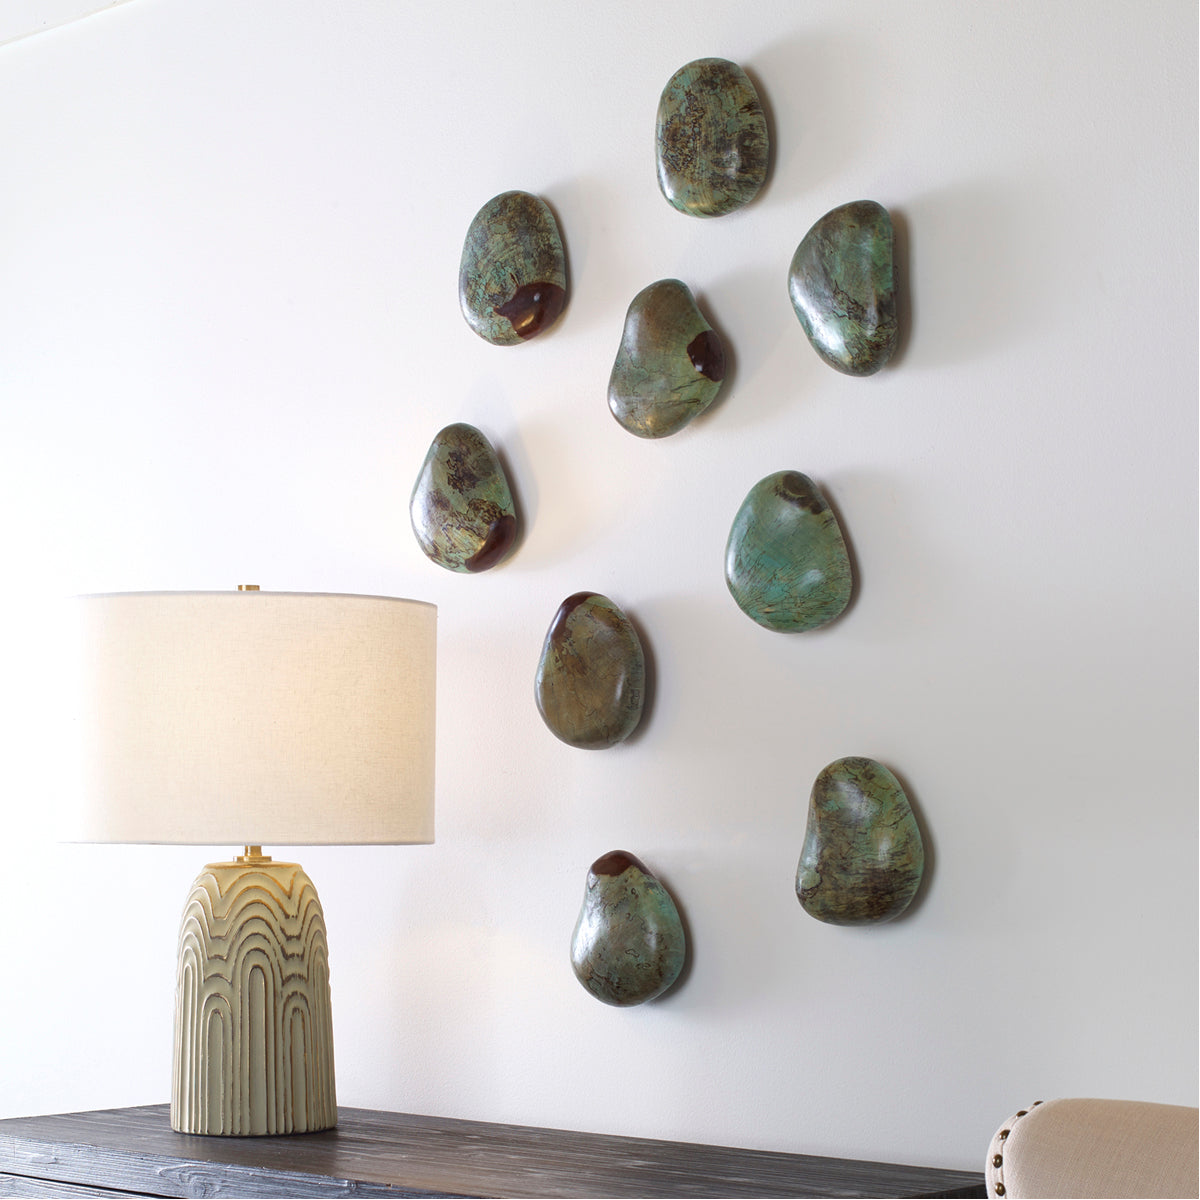 Uttermost Pebbles Wood Wall Decor, 9-Piece Set